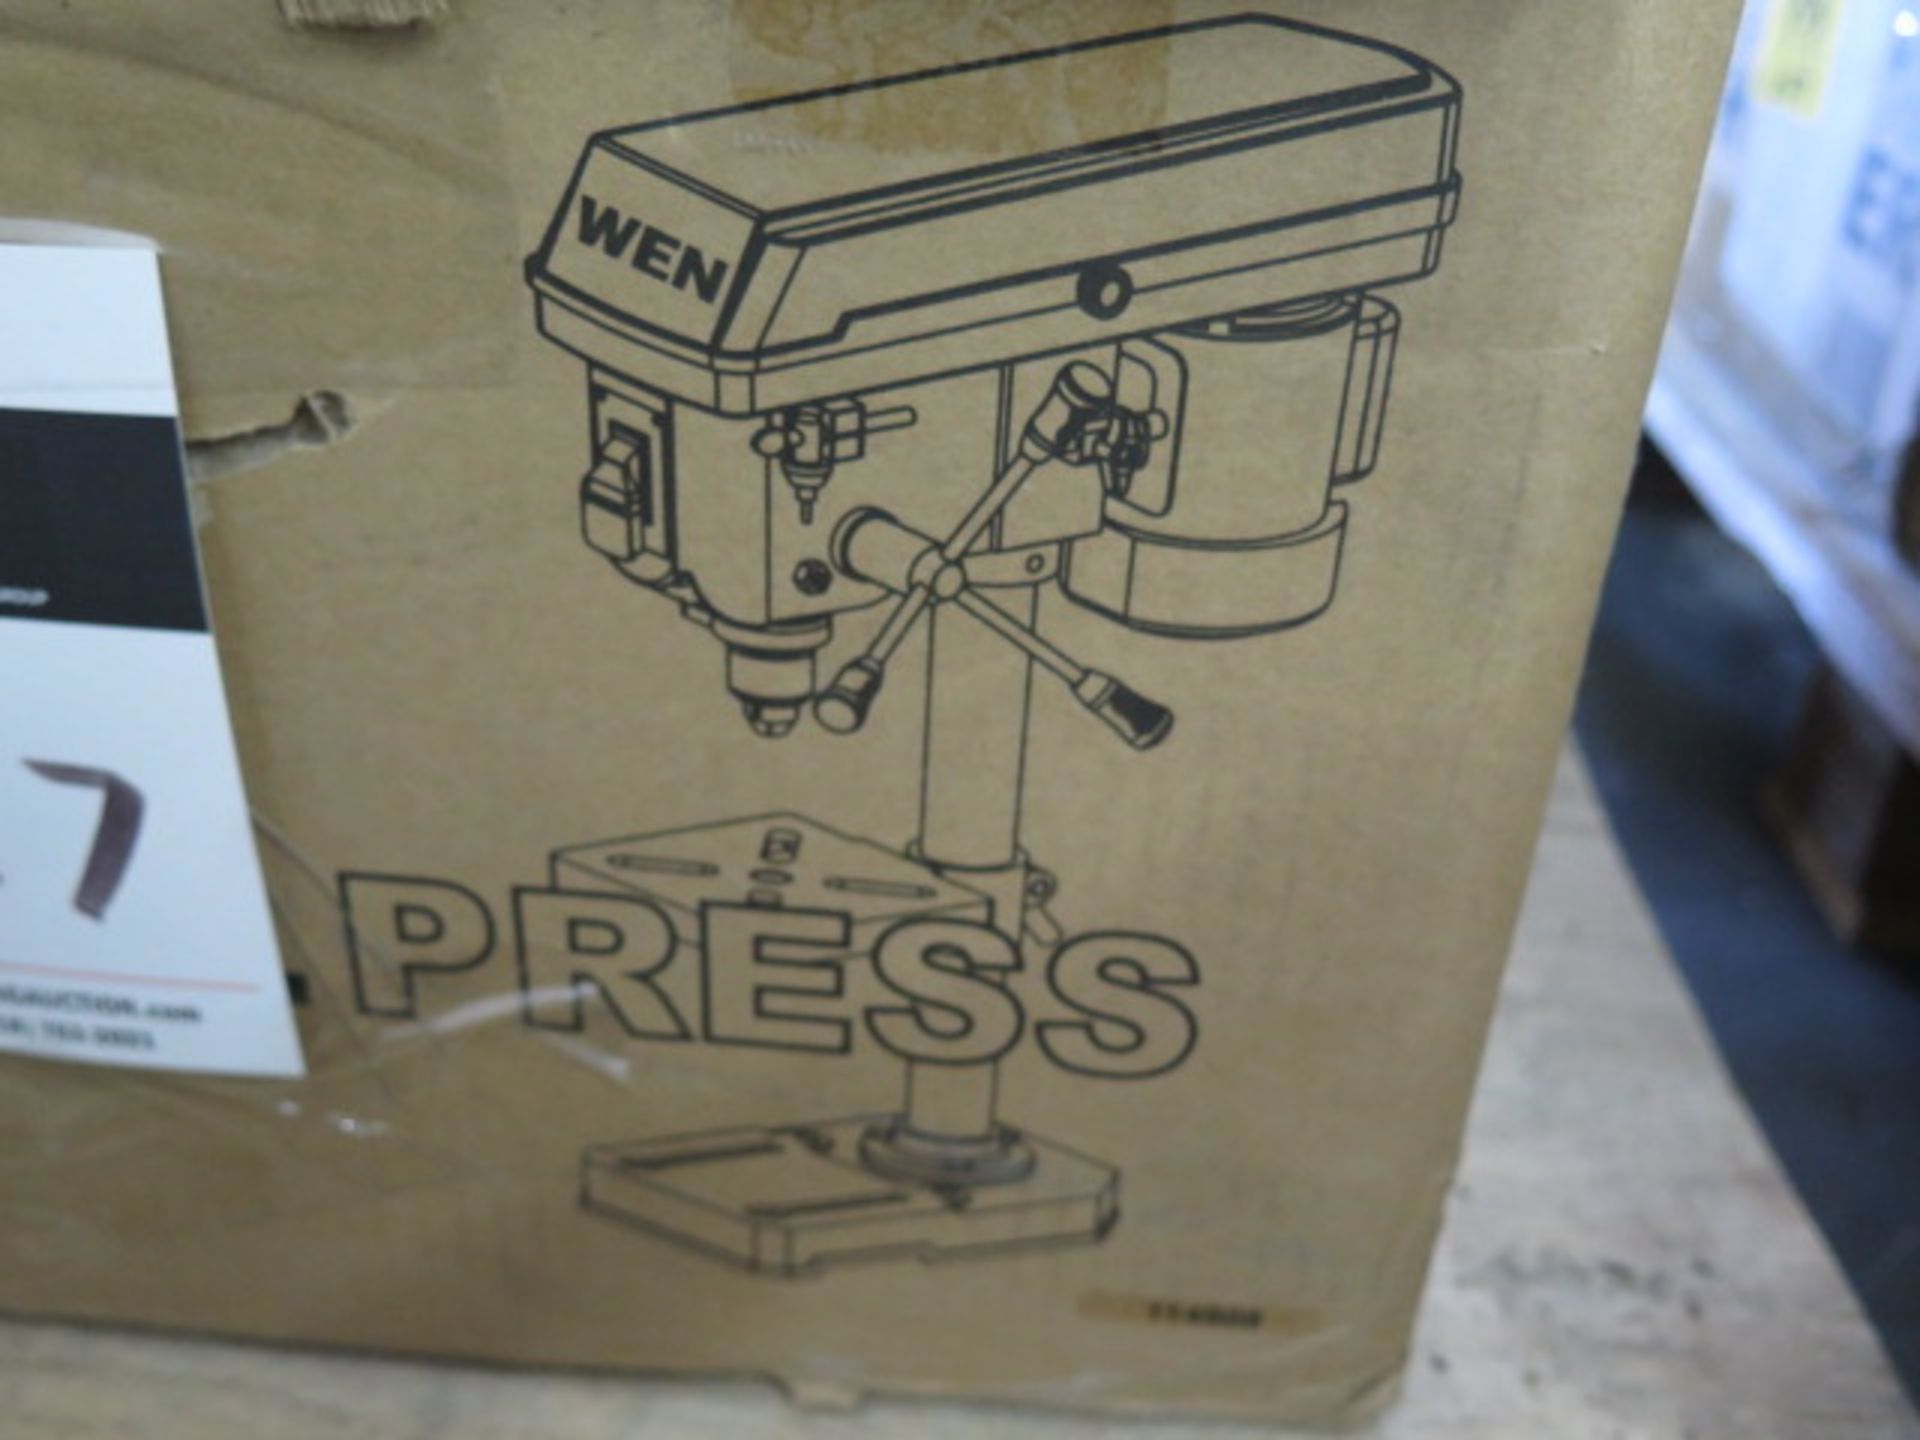 Wen 4208 8” Drill Press - Image 2 of 2